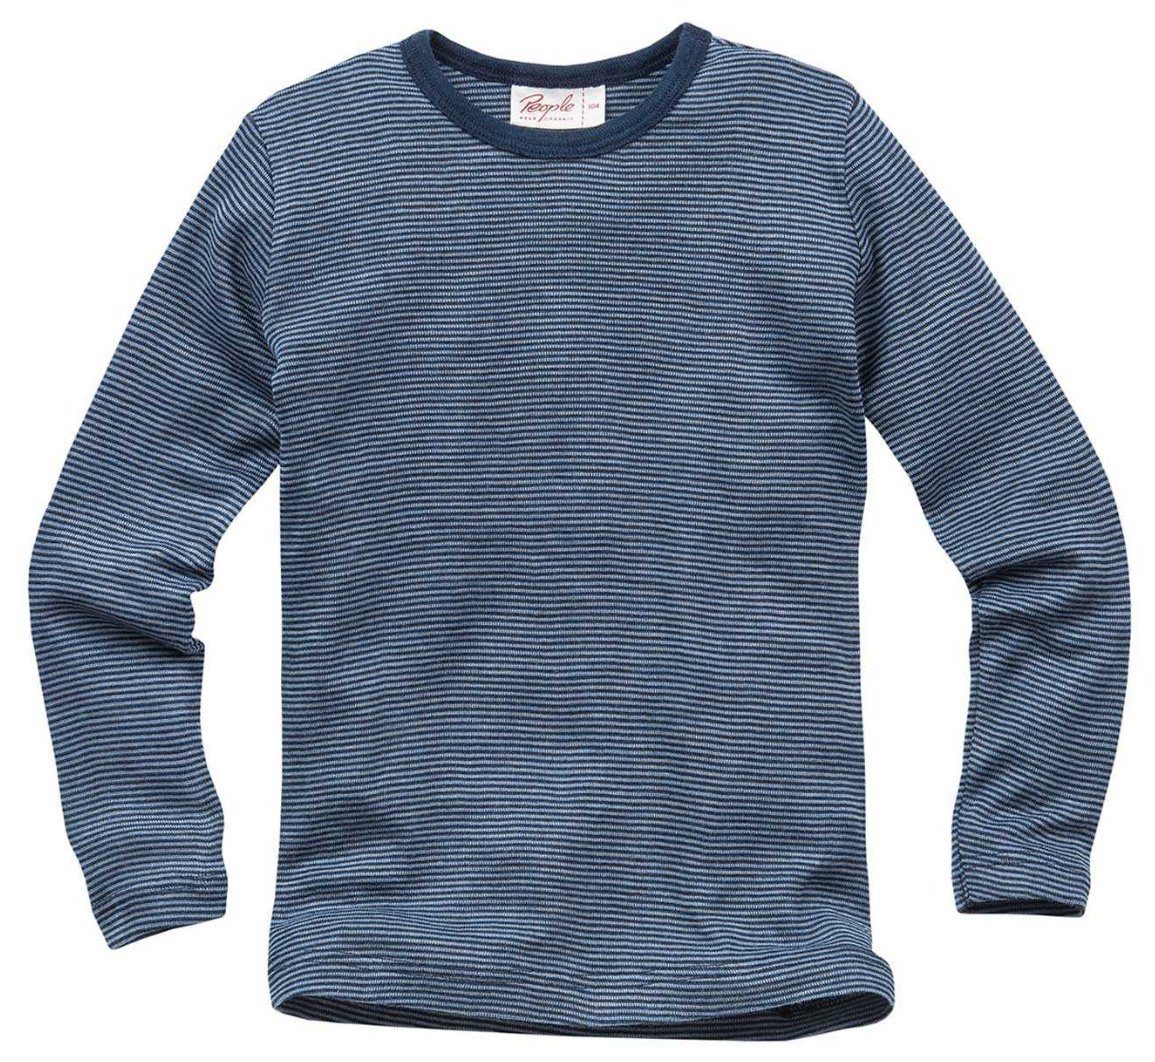 Wear -Wolle-Seide Organic Shirt- gestreift Langarm Unterhemd People blau